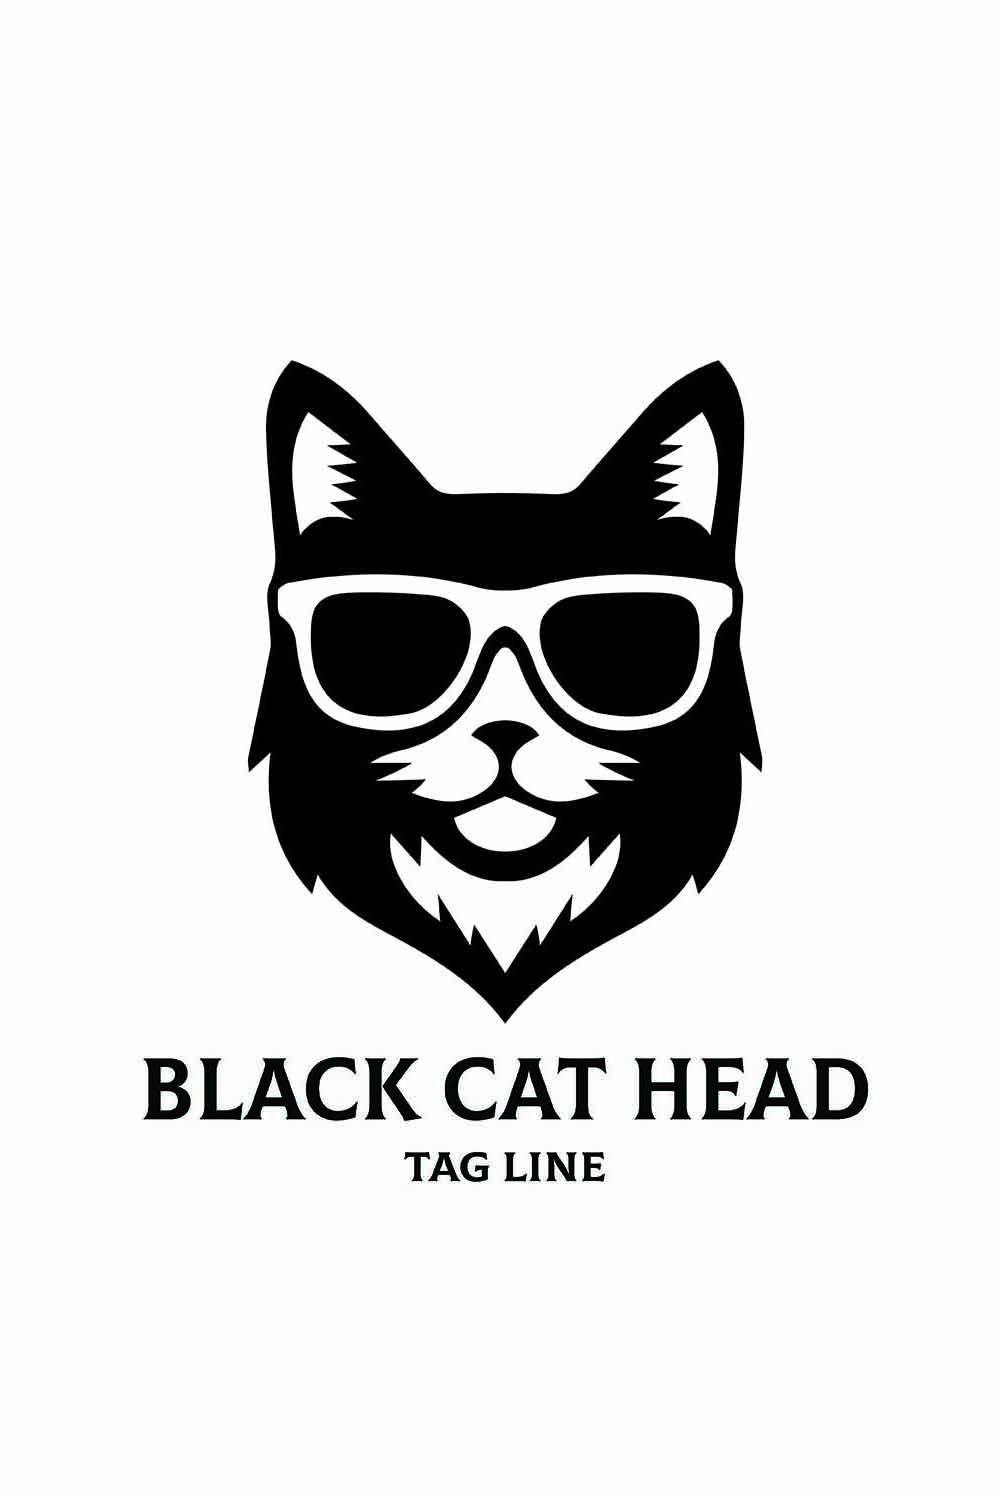 Black Cat Head Logo pinterest preview image.